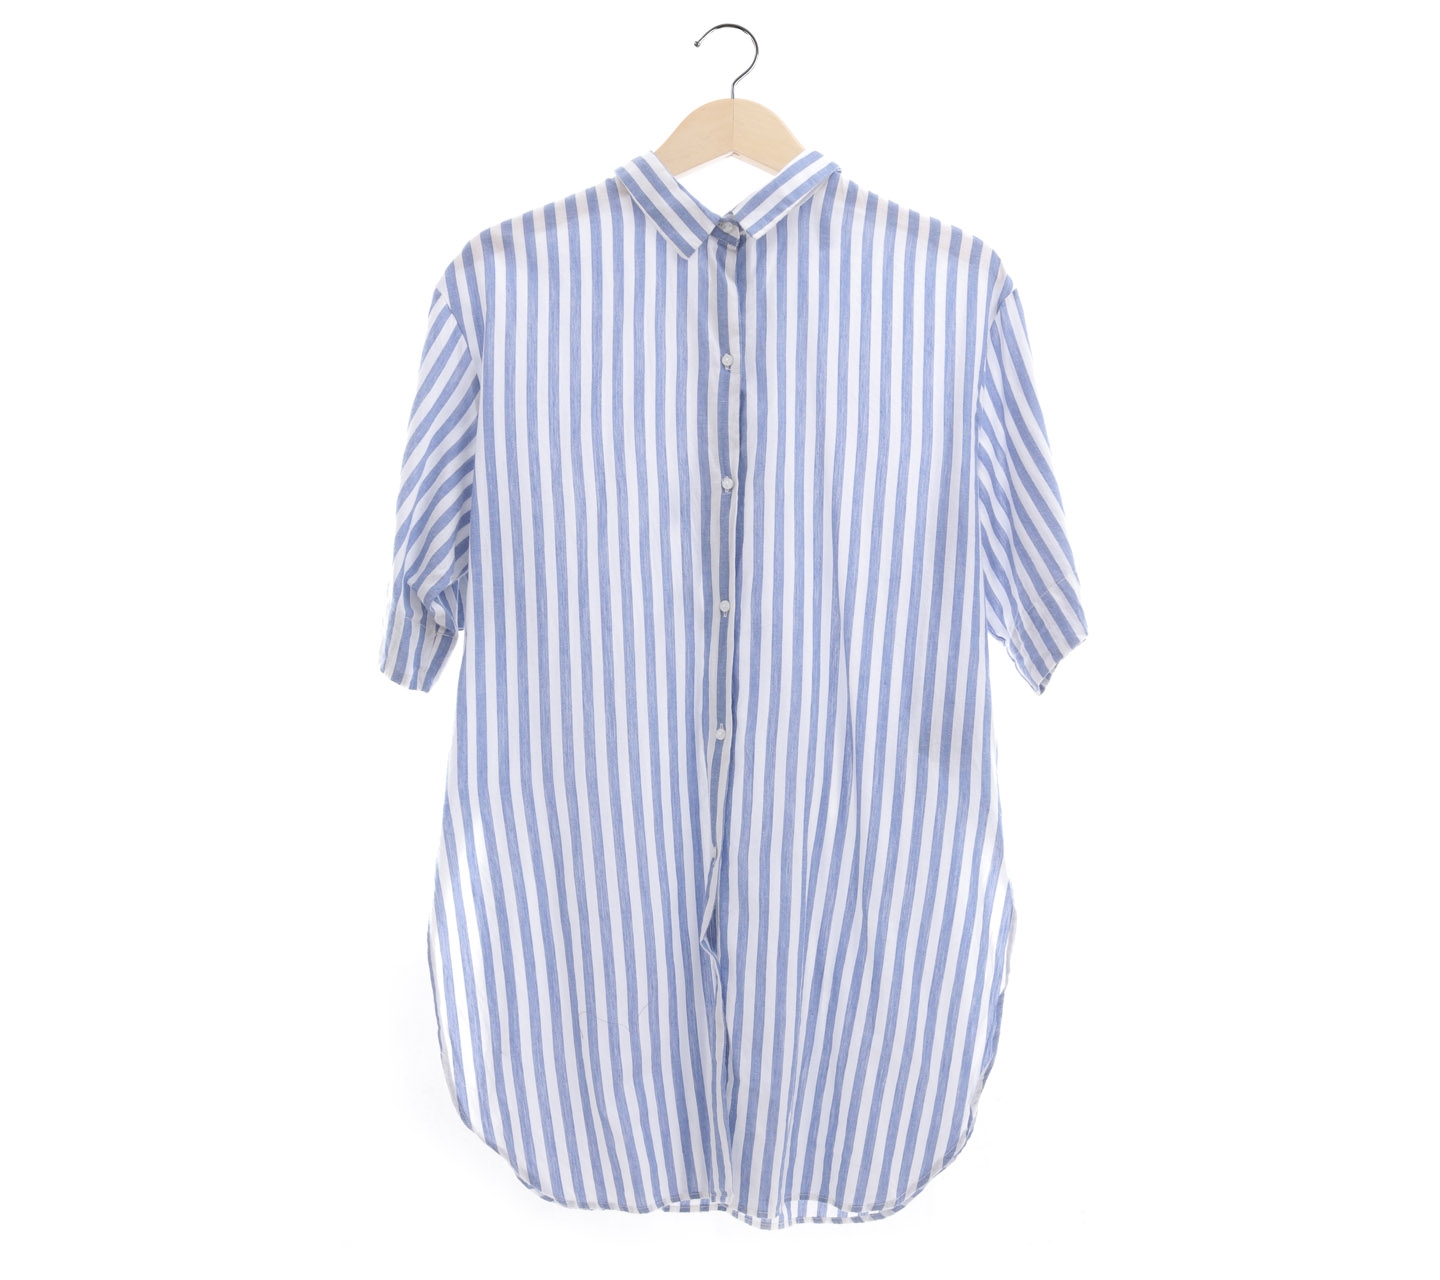 Zara Blue & White Striped Tunic Shirt